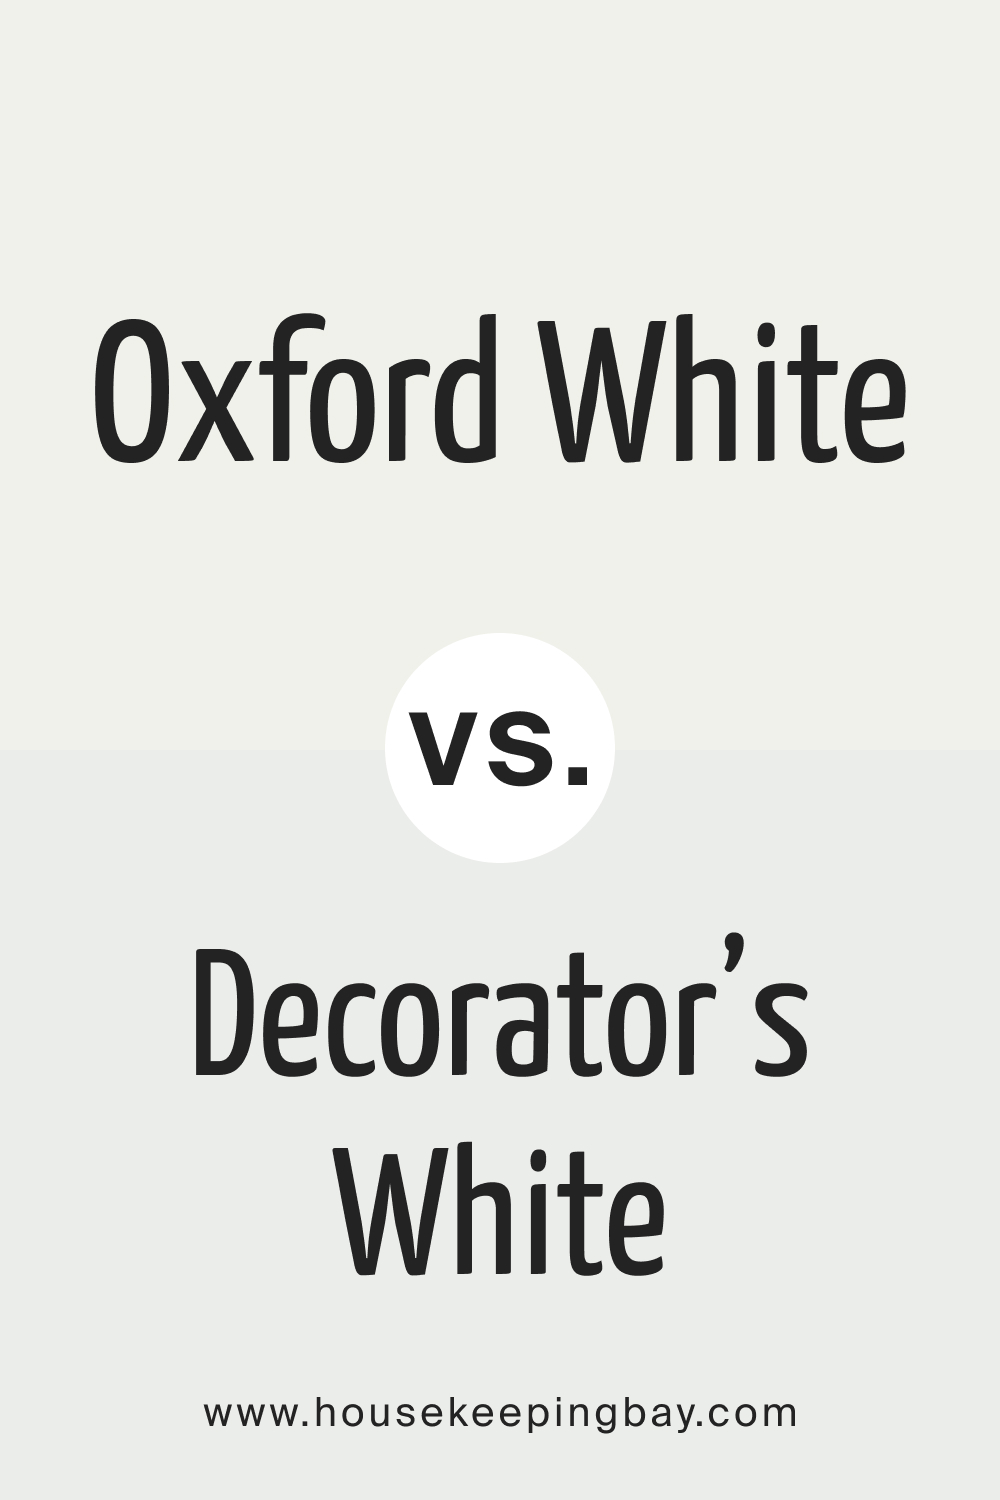 Oxford White vs. Decorator’s White